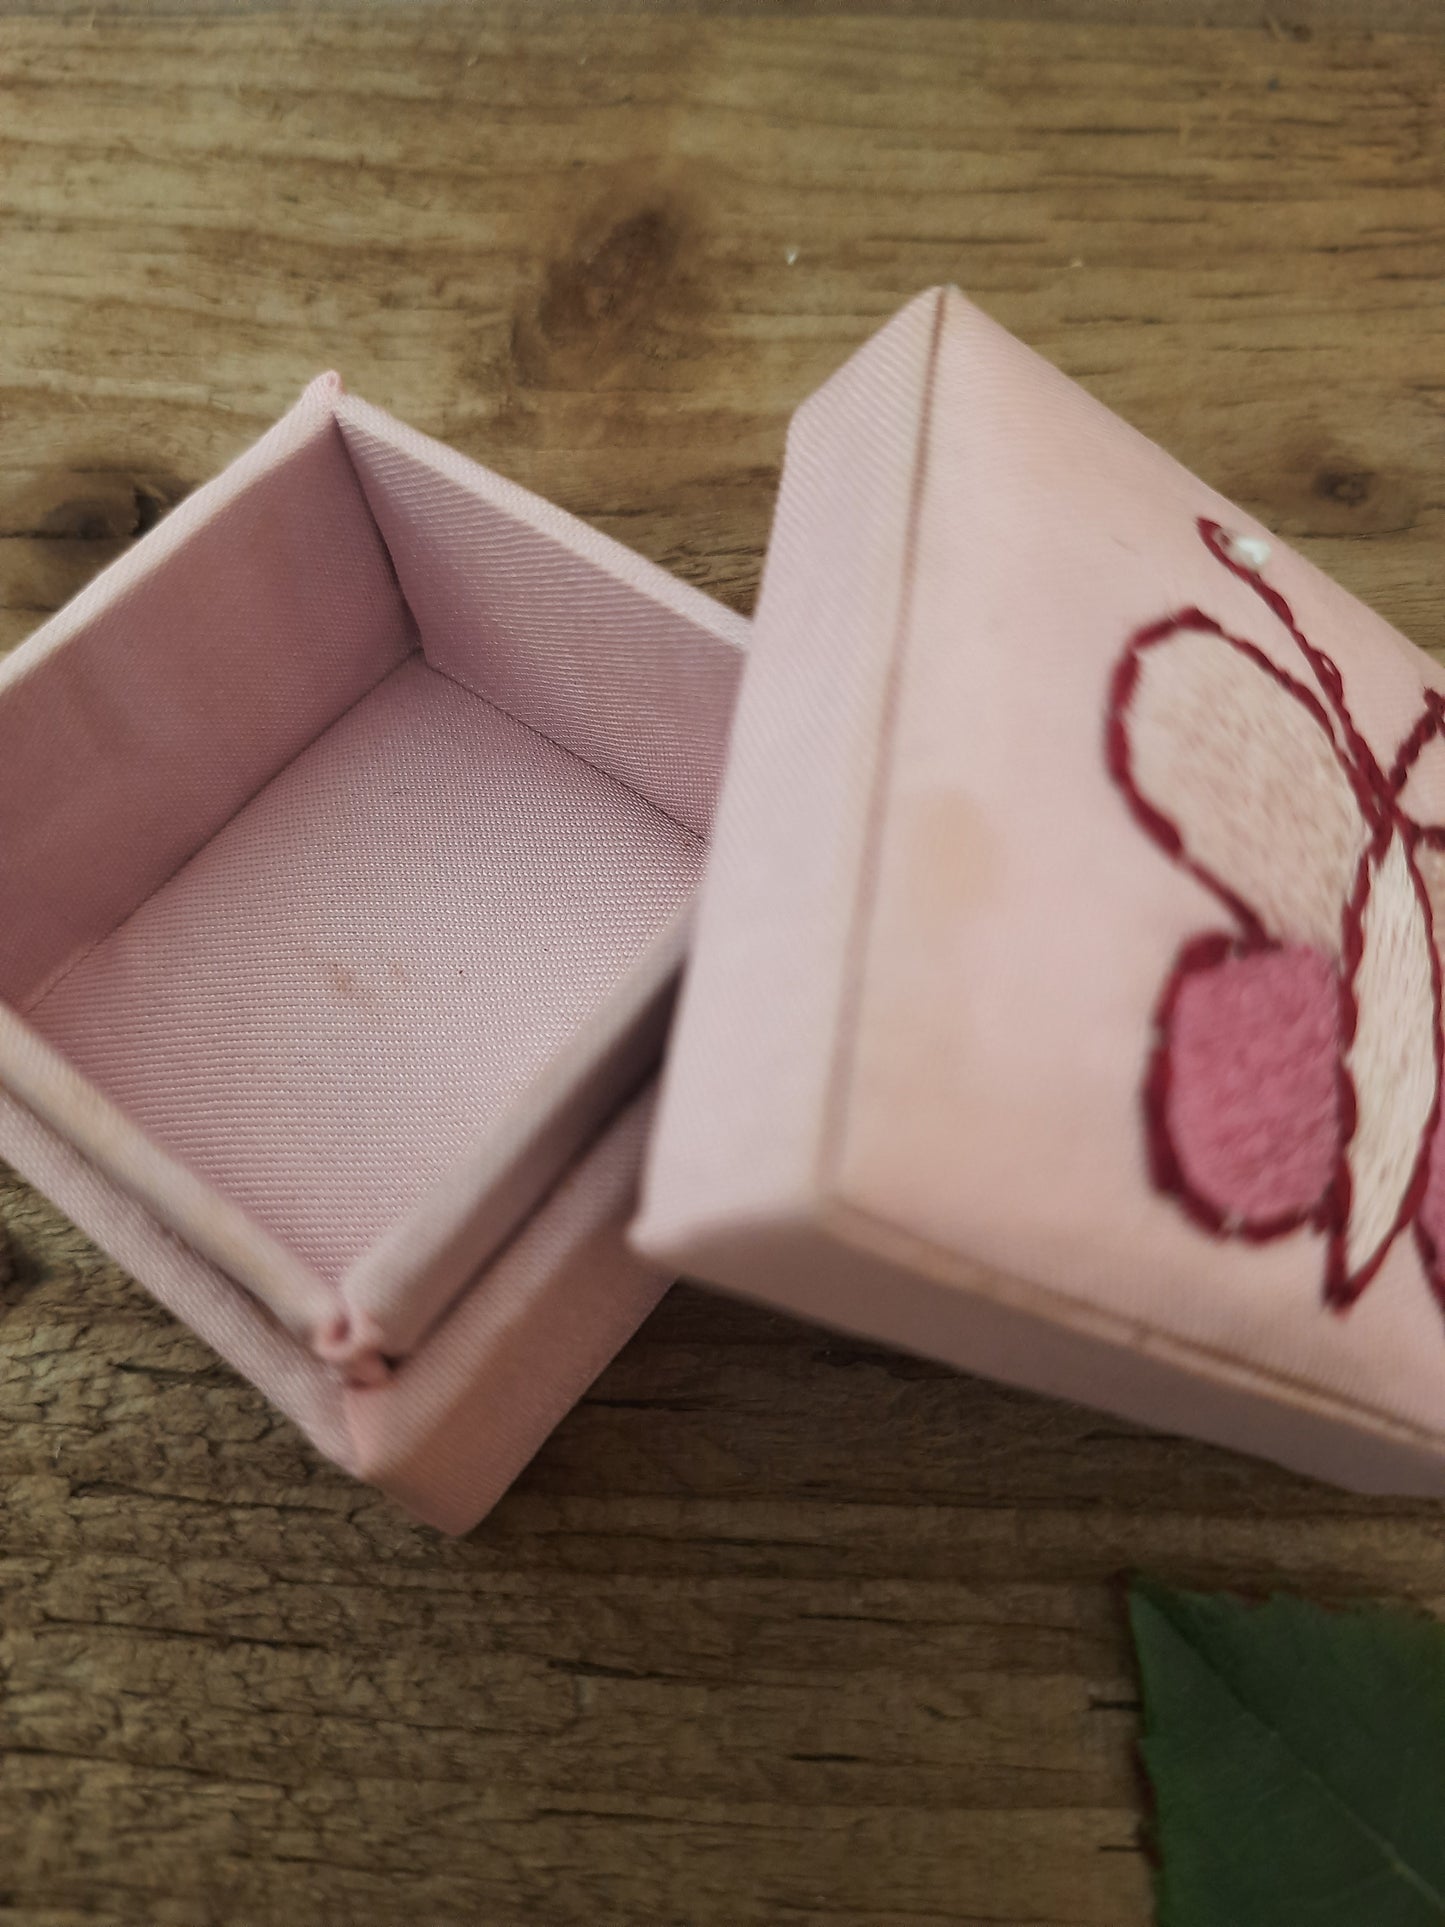 Jewellery Trinket Box Handmade Keepsake Storage Organiser Gift Fair Trade